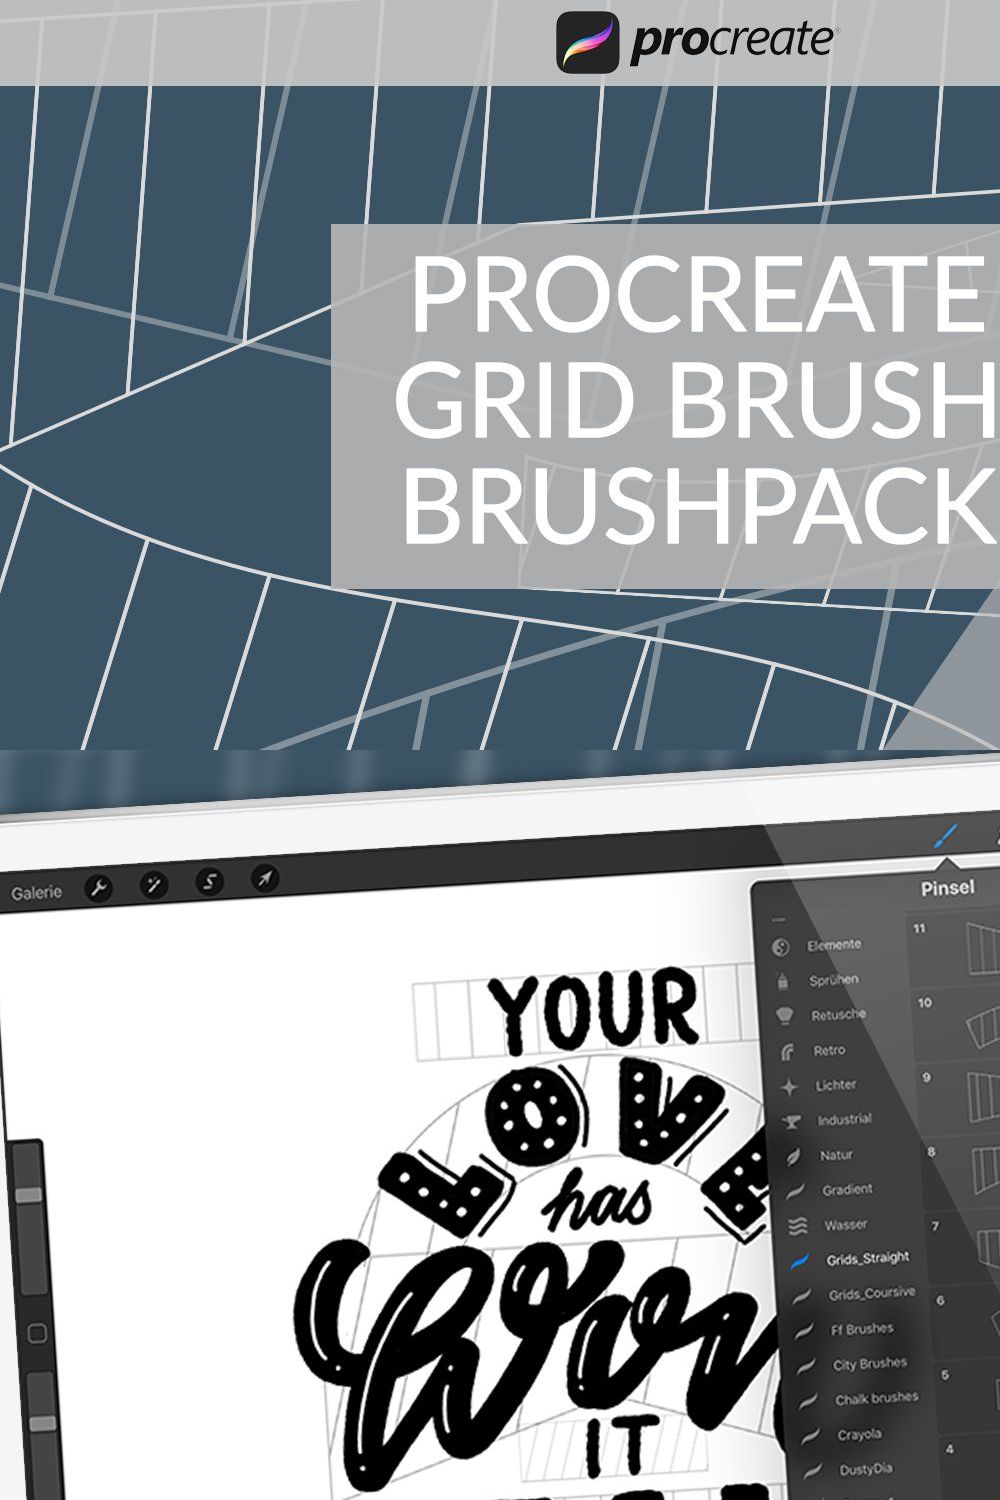 Procreate Grid Brush Brushpack pinterest preview image.